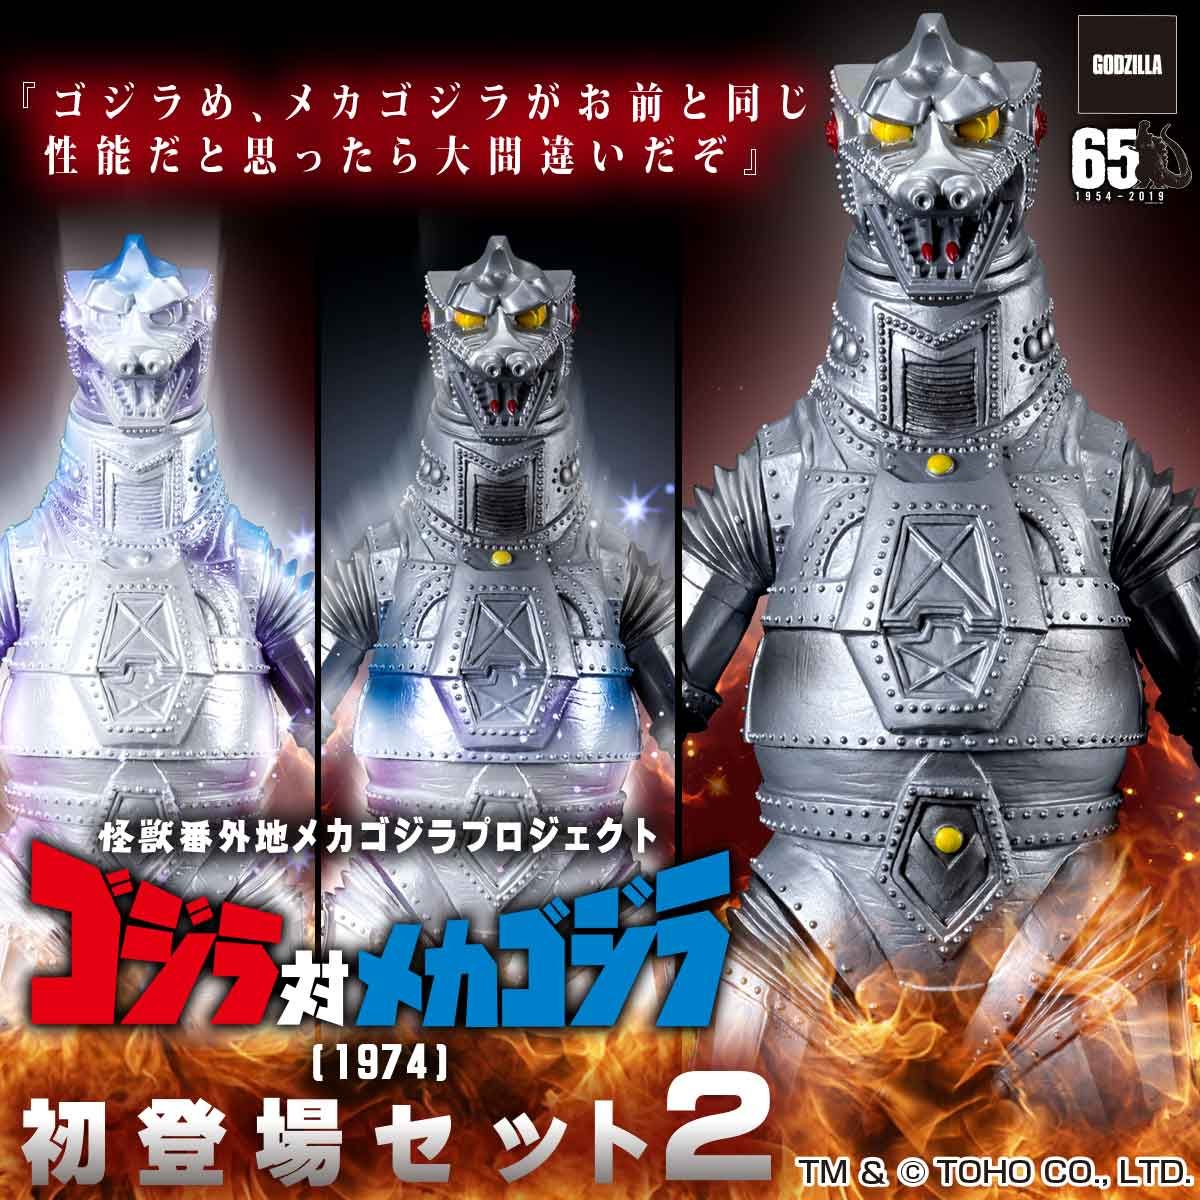 Bandai Godzilla Classic 12 Inch Mechagodzilla Figure 65th Anniv Final War 97912 for sale online 